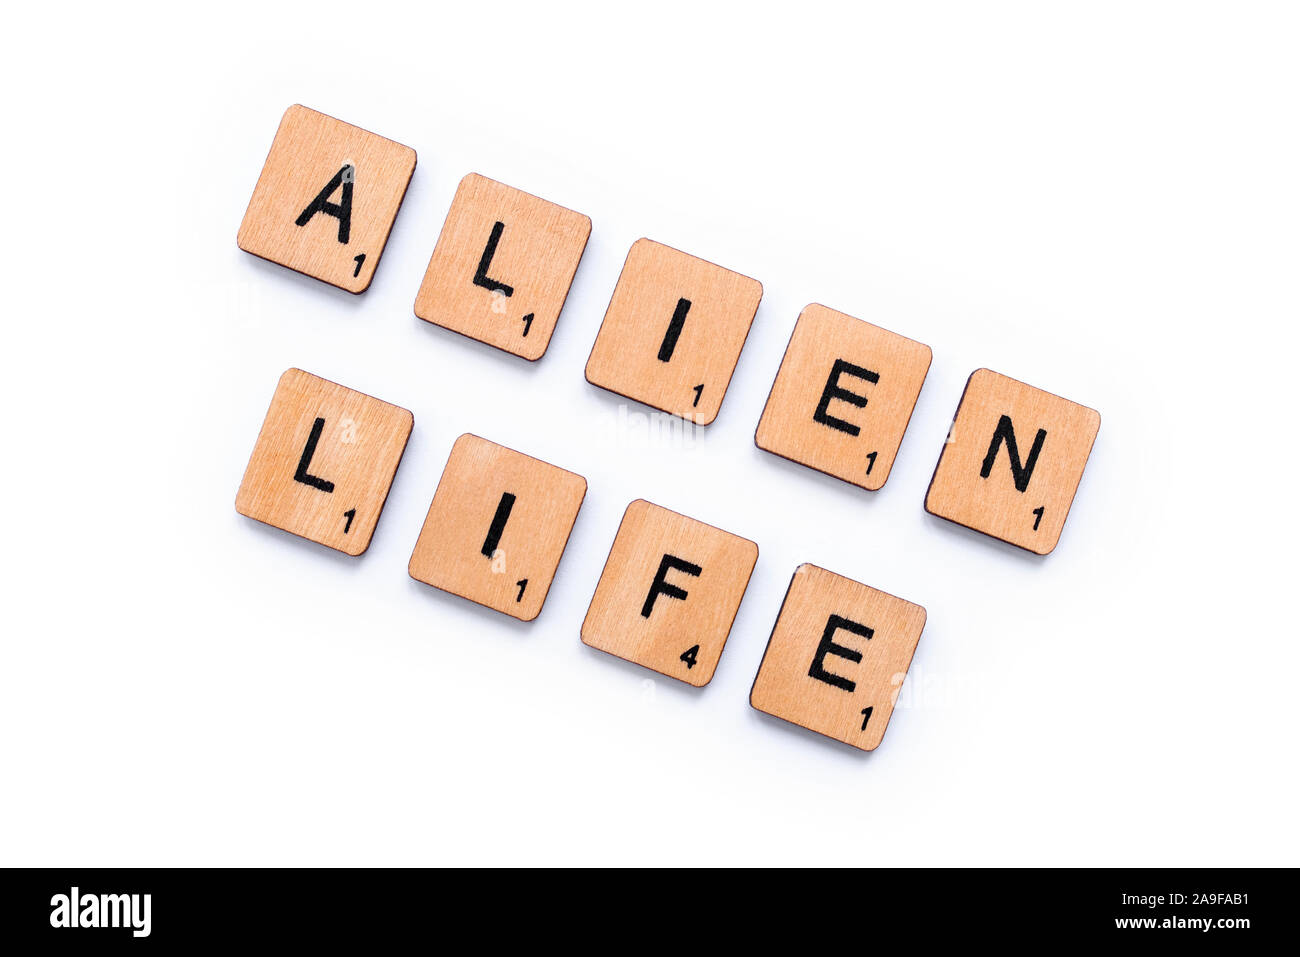 London, UK - June 12th 2019: The phrase ALIEN LIFE, spelt with wooden letter tiles over a white background. Stock Photo